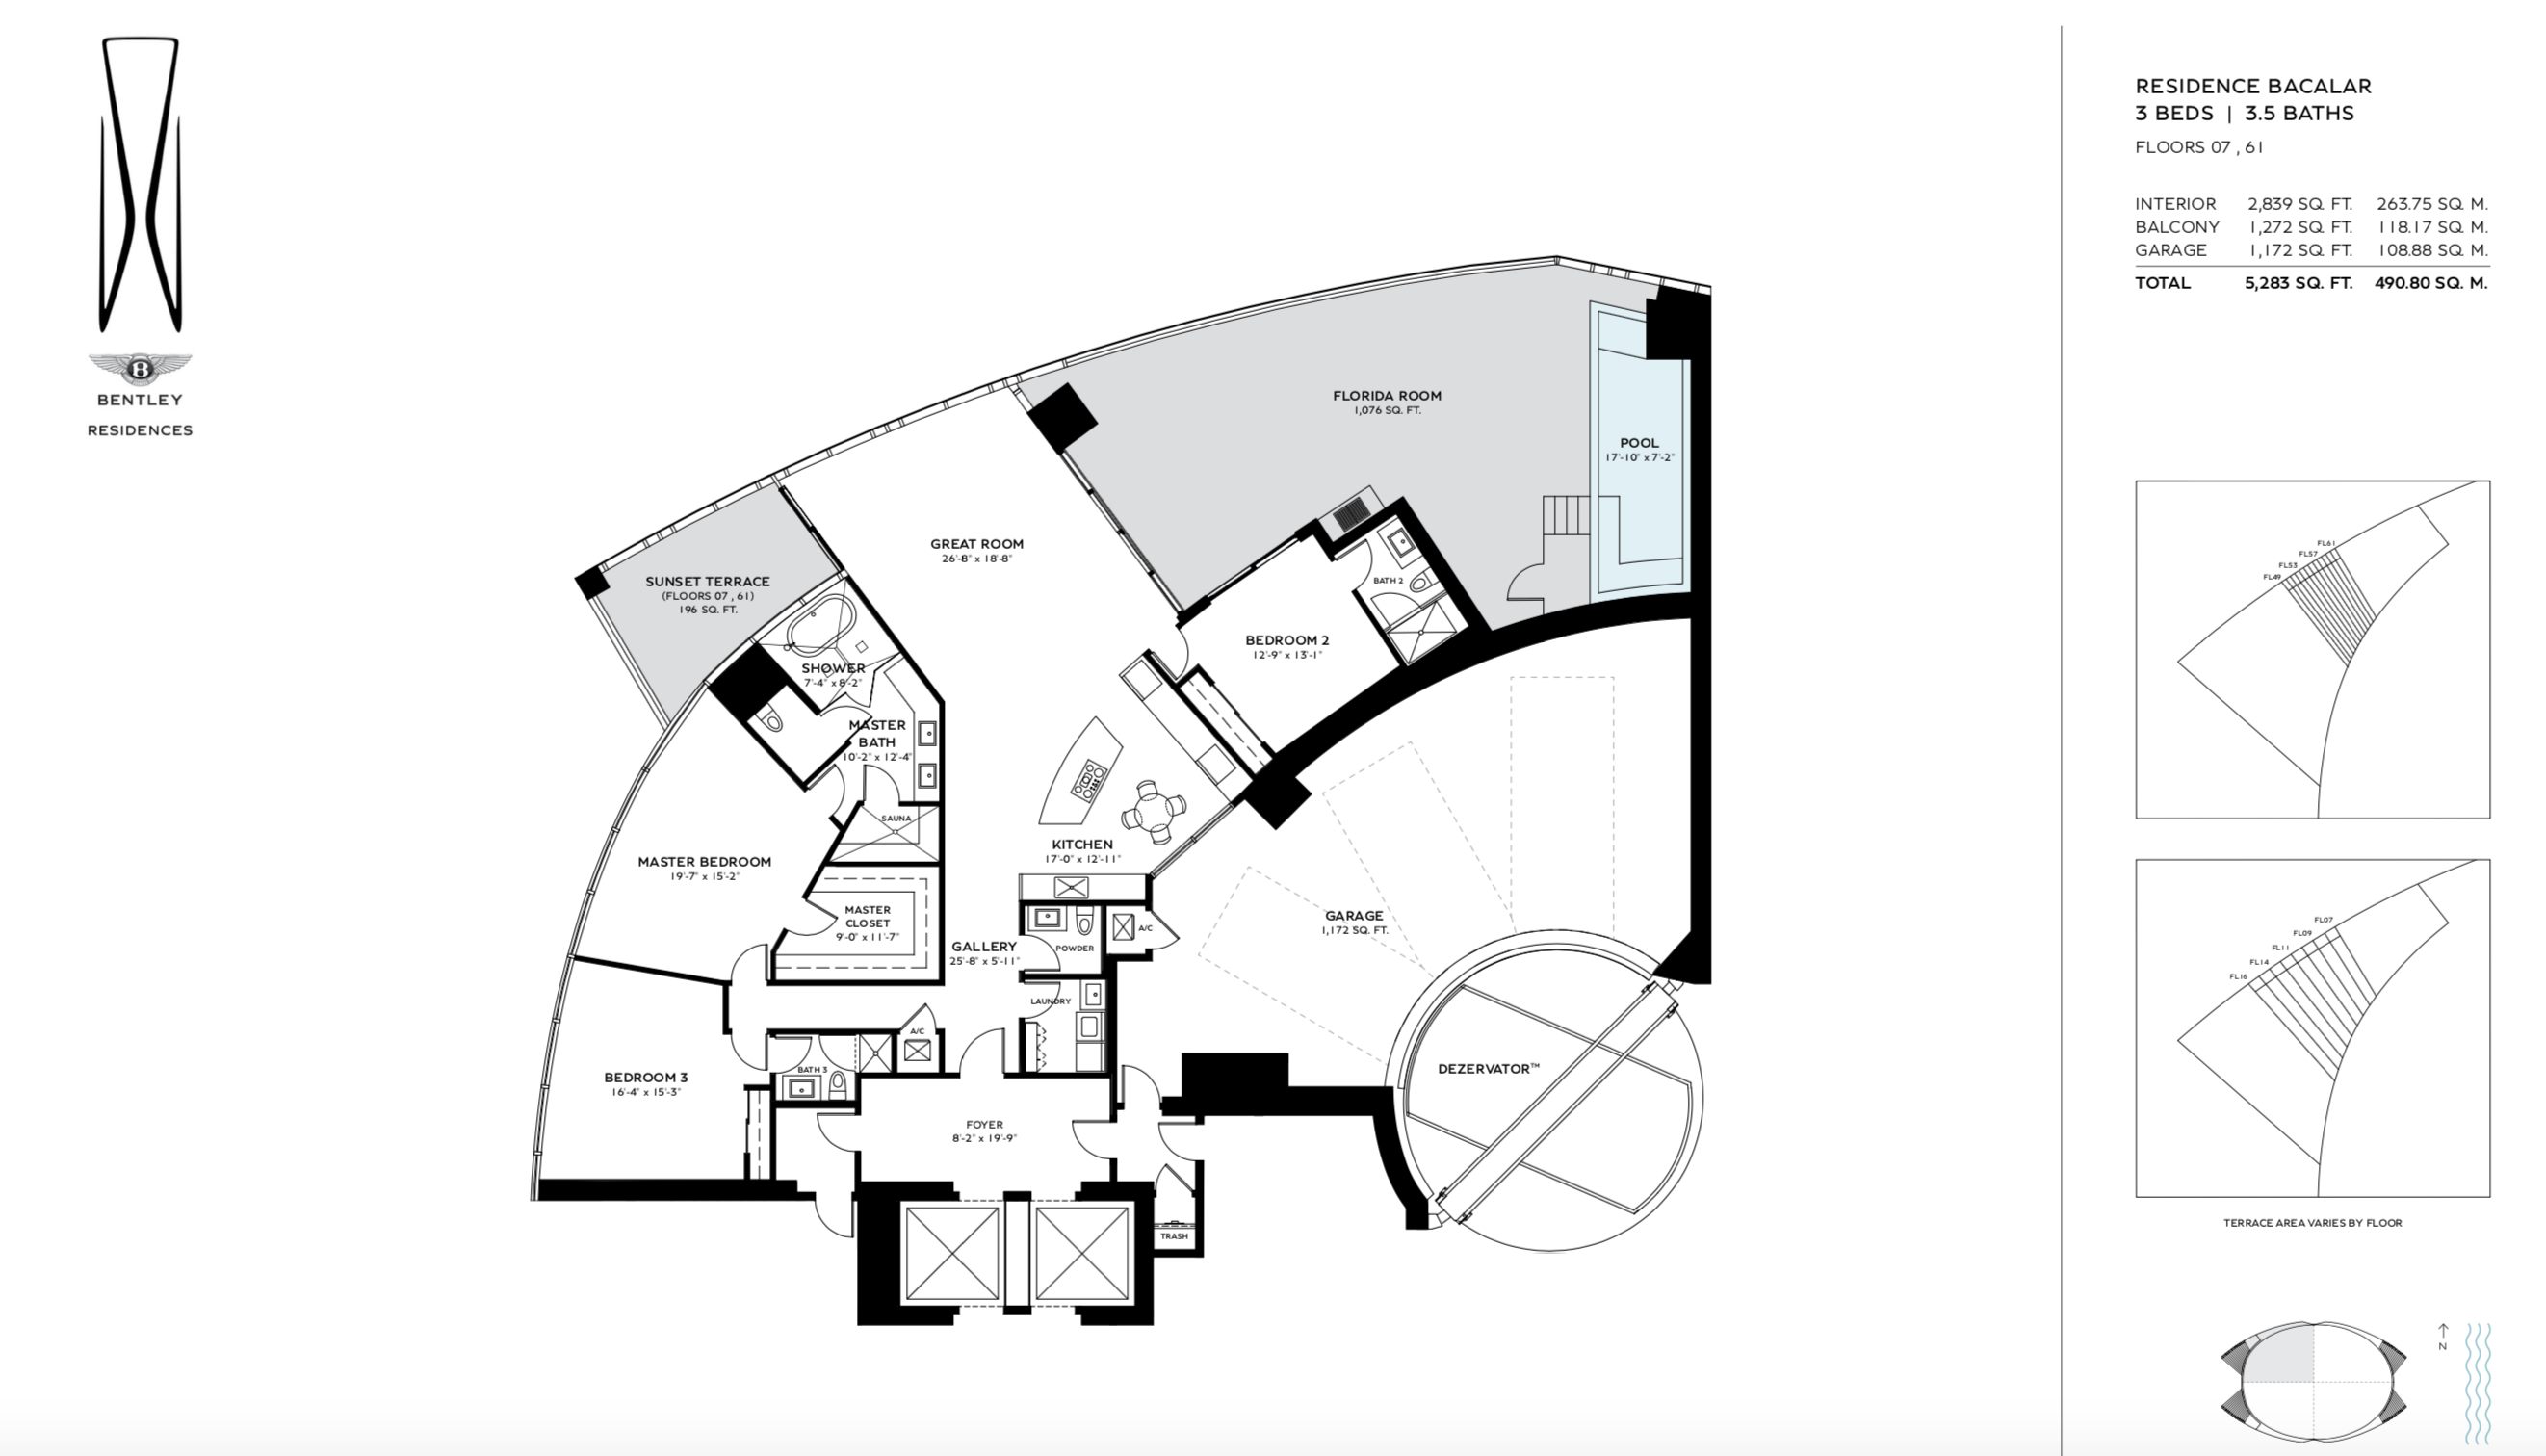 Bentley Residences Sunny Isles  | Residence Bacalar | NW Exposure | 3 Be/3.5Ba | 2,839 SF | Floors 7 & 61